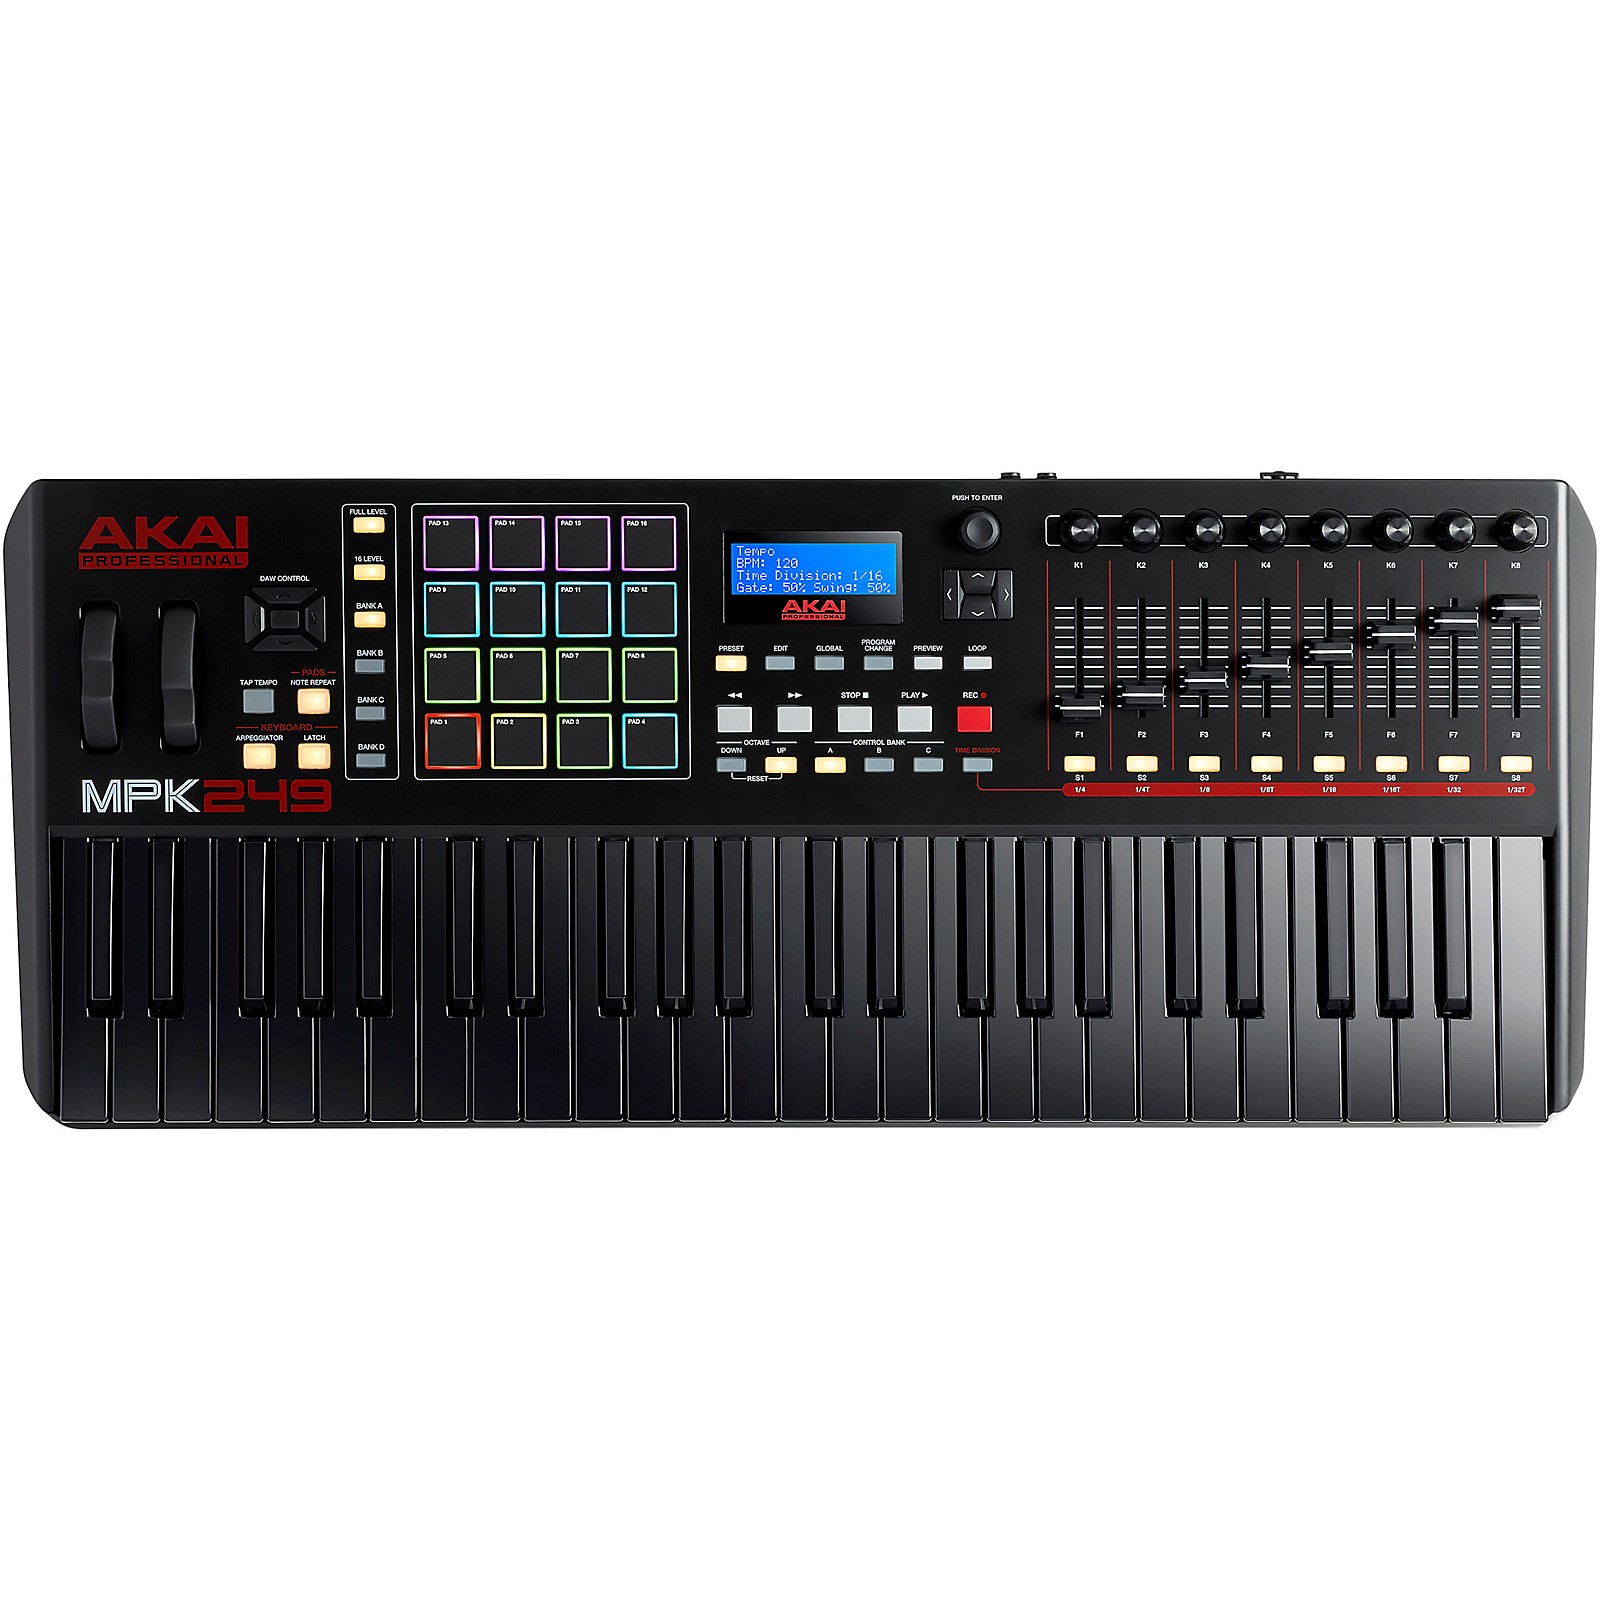 Akai Professional MPK249 49-Key Controller, Black-on-Black | Music